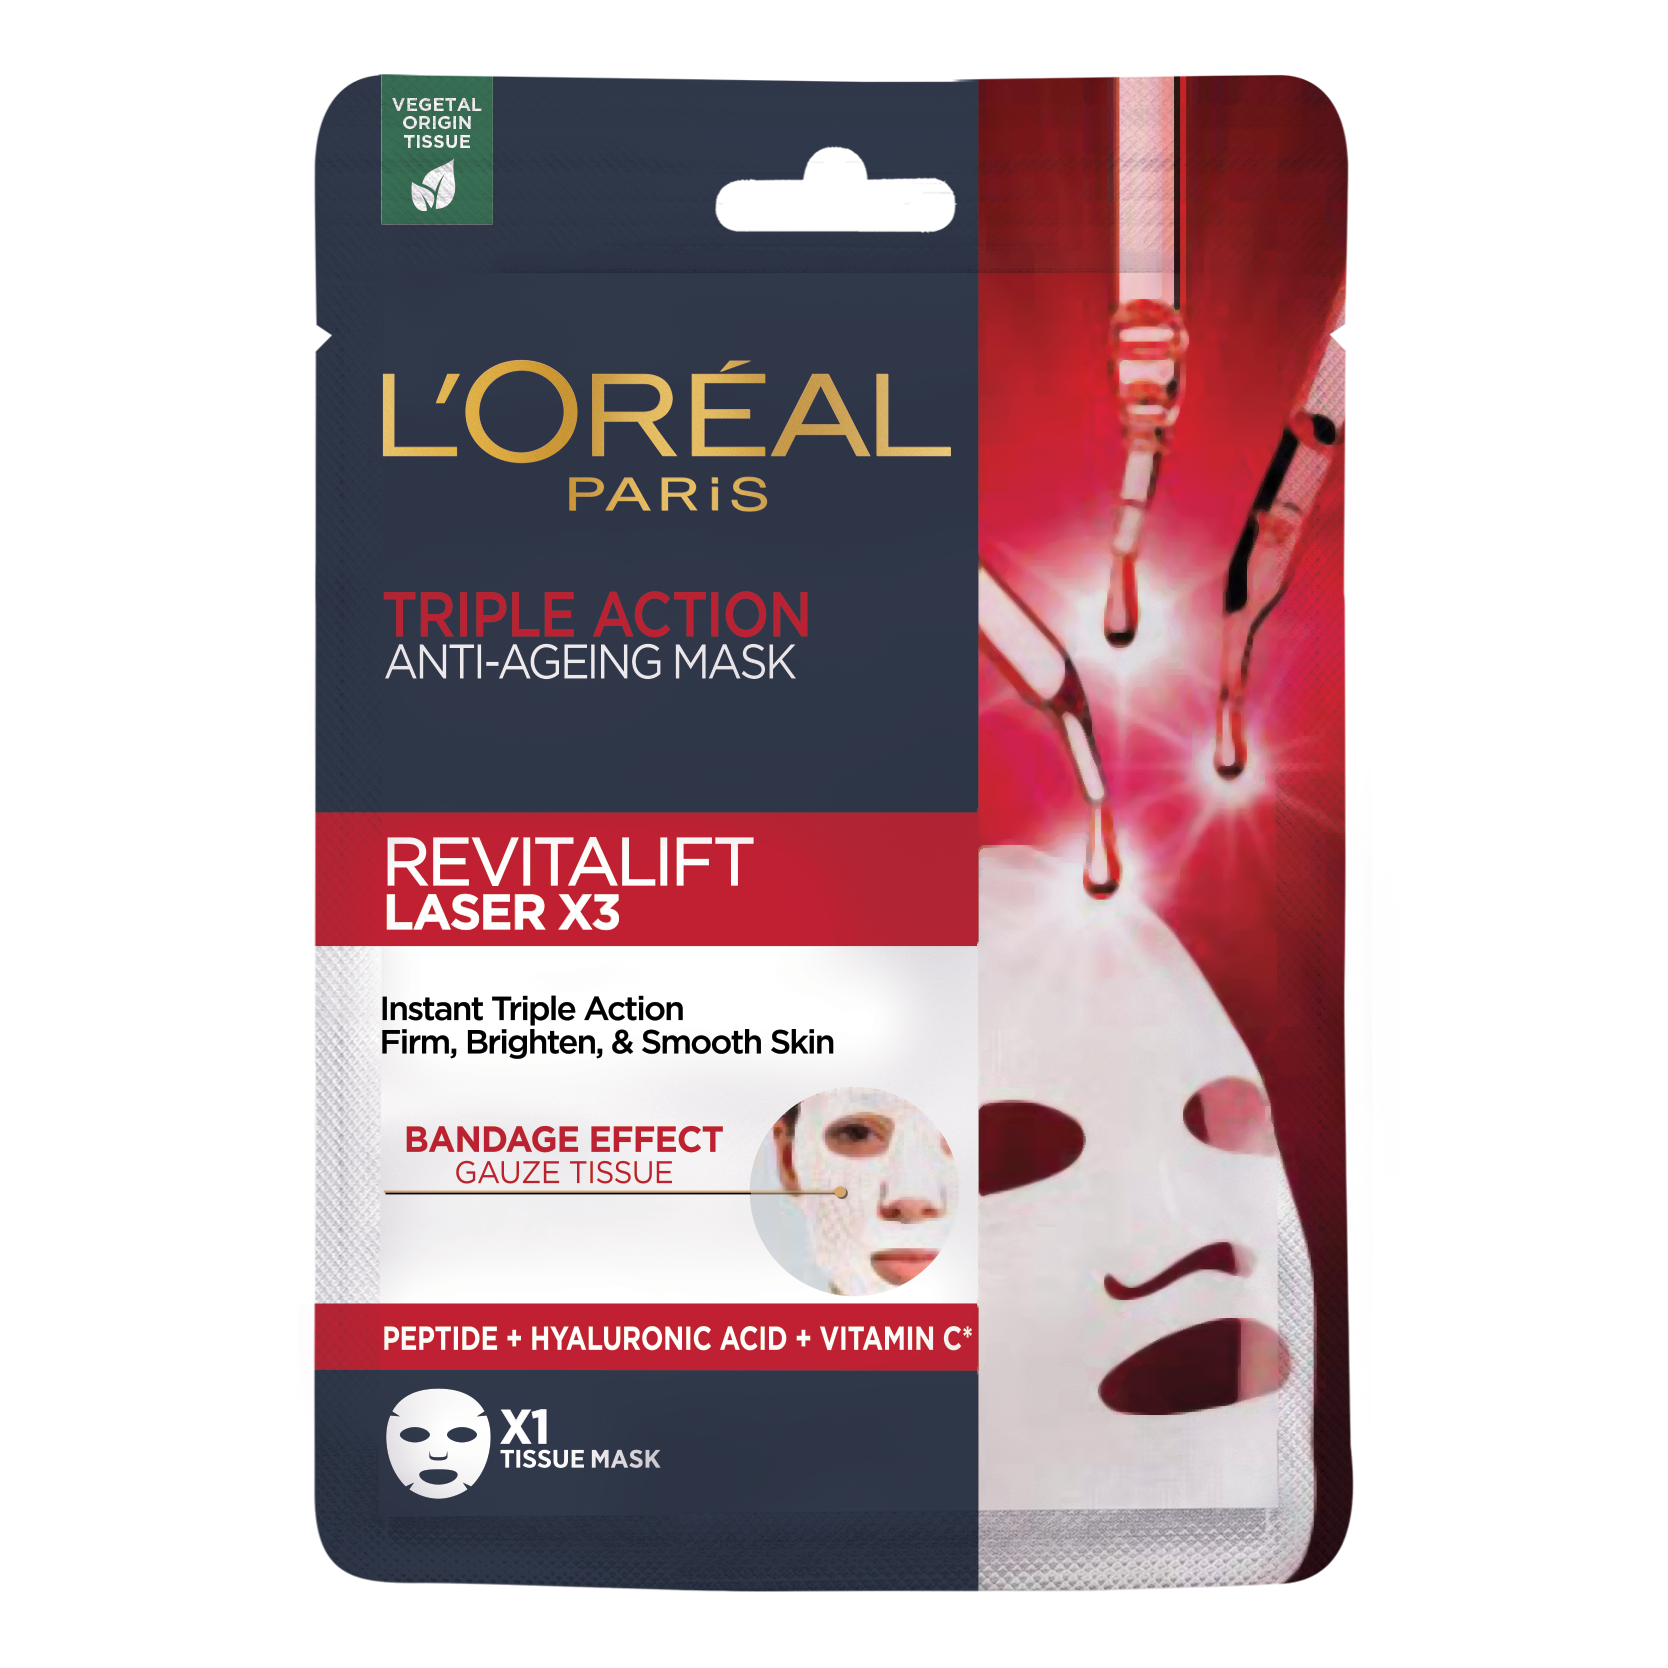 Тканевая маска для лица L'Oreal Paris Skin Expert Ревиталифт Лазер Икс 3, антивозрастная, 28 г (AA491700) - фото 1